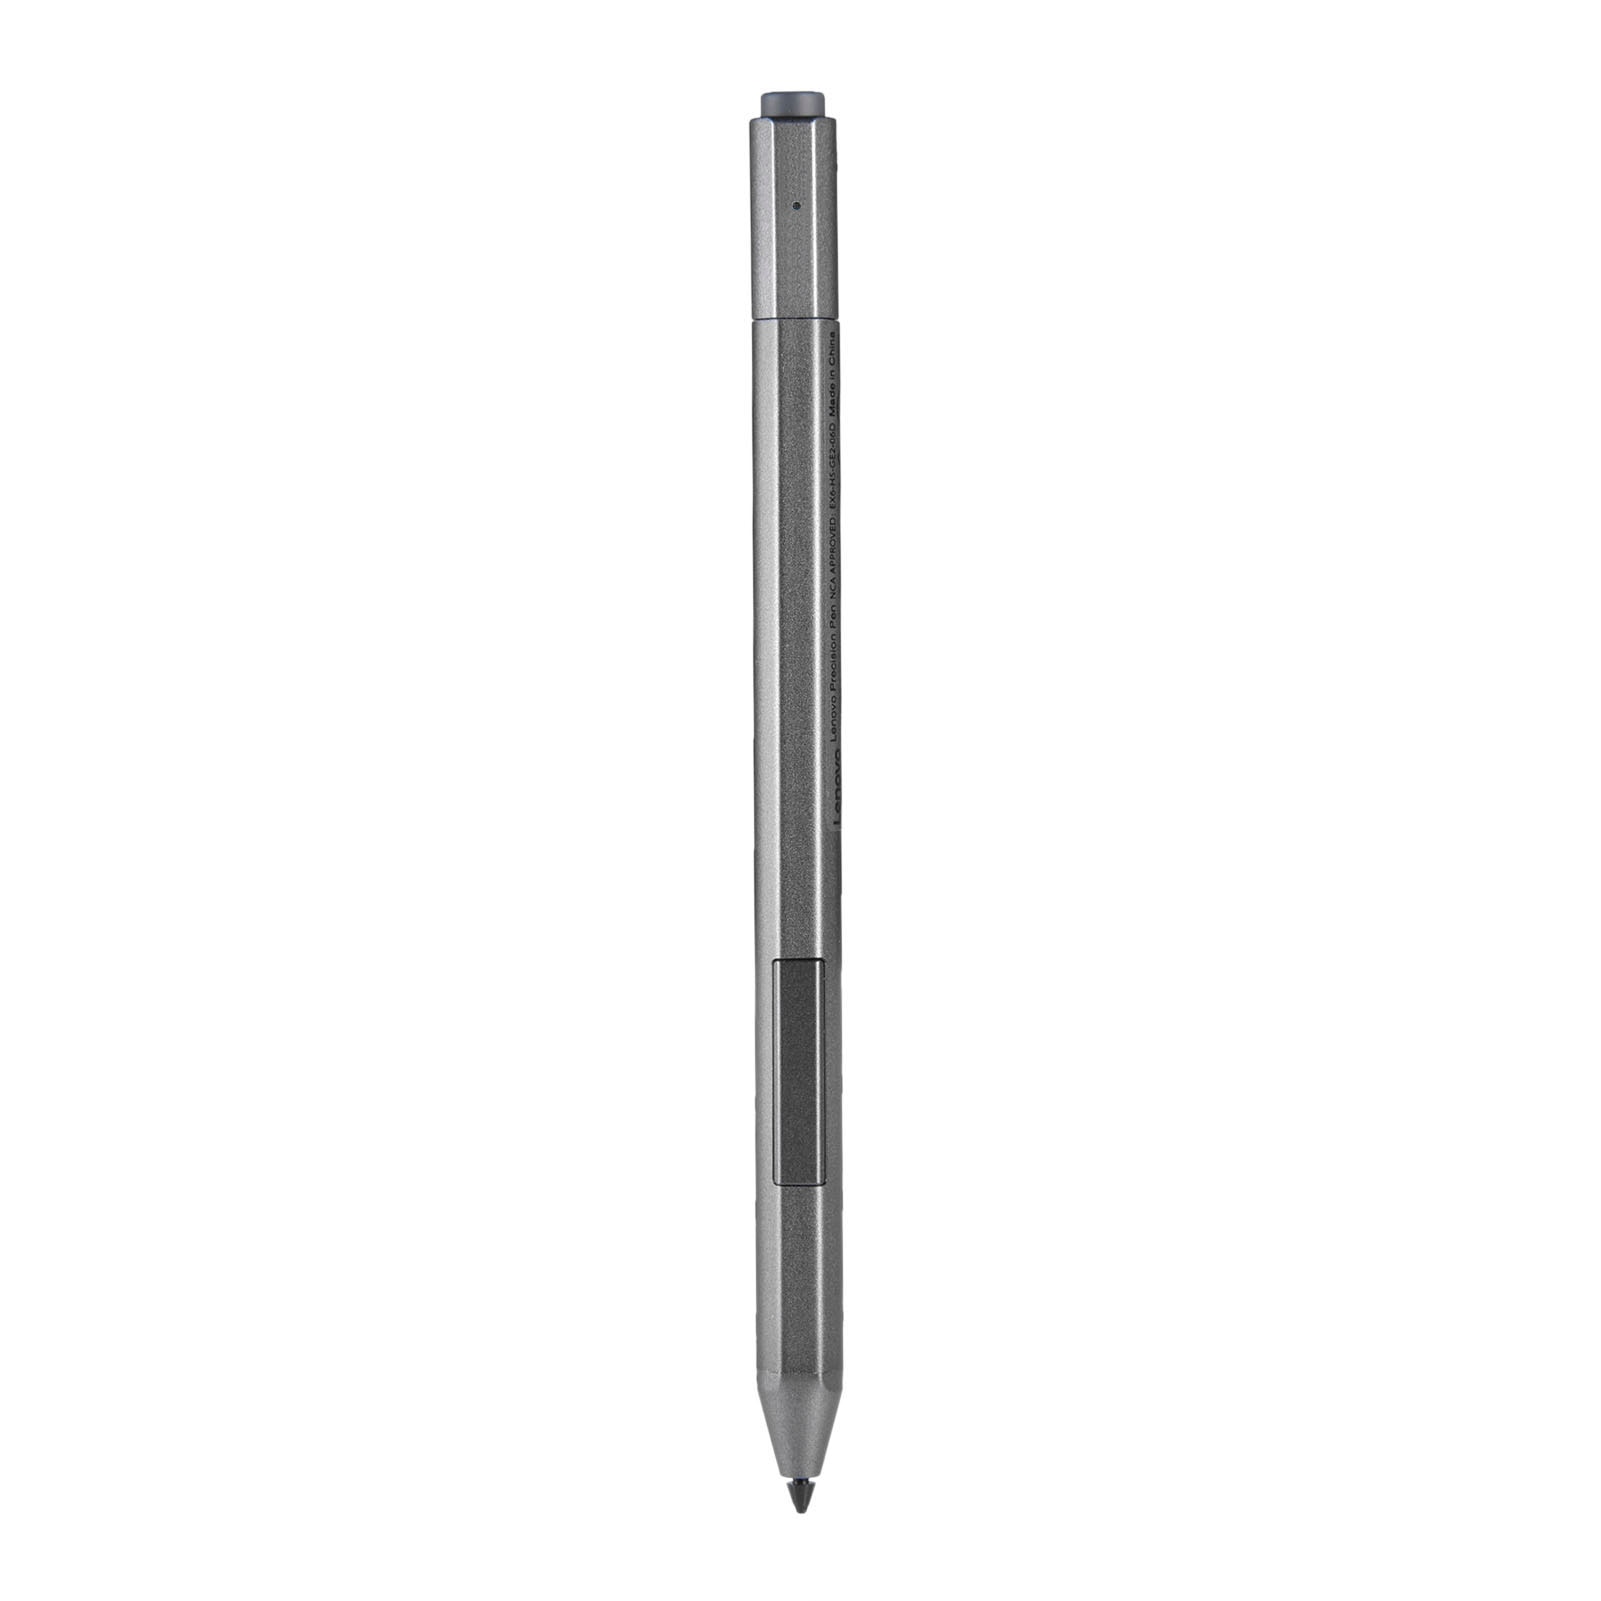 Original Precision Pen For Lenovo YOGA MIIX510/520 Yoga Book 2 C930 ThinkBook Plus Bluetooth Stylus With 4096 Pressure Sensing